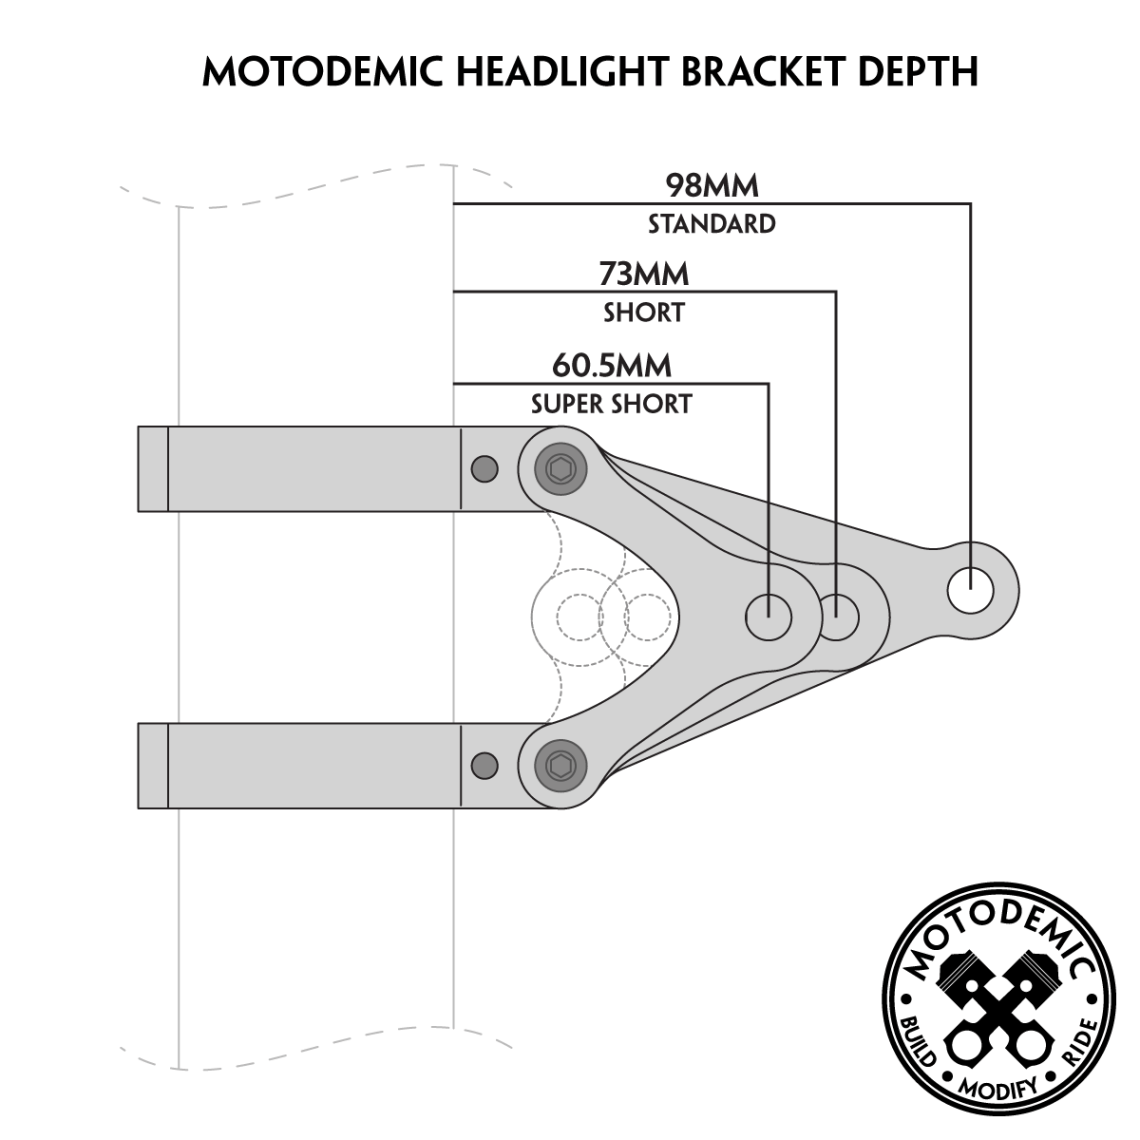 36mm Motodemic Headlight Brackets